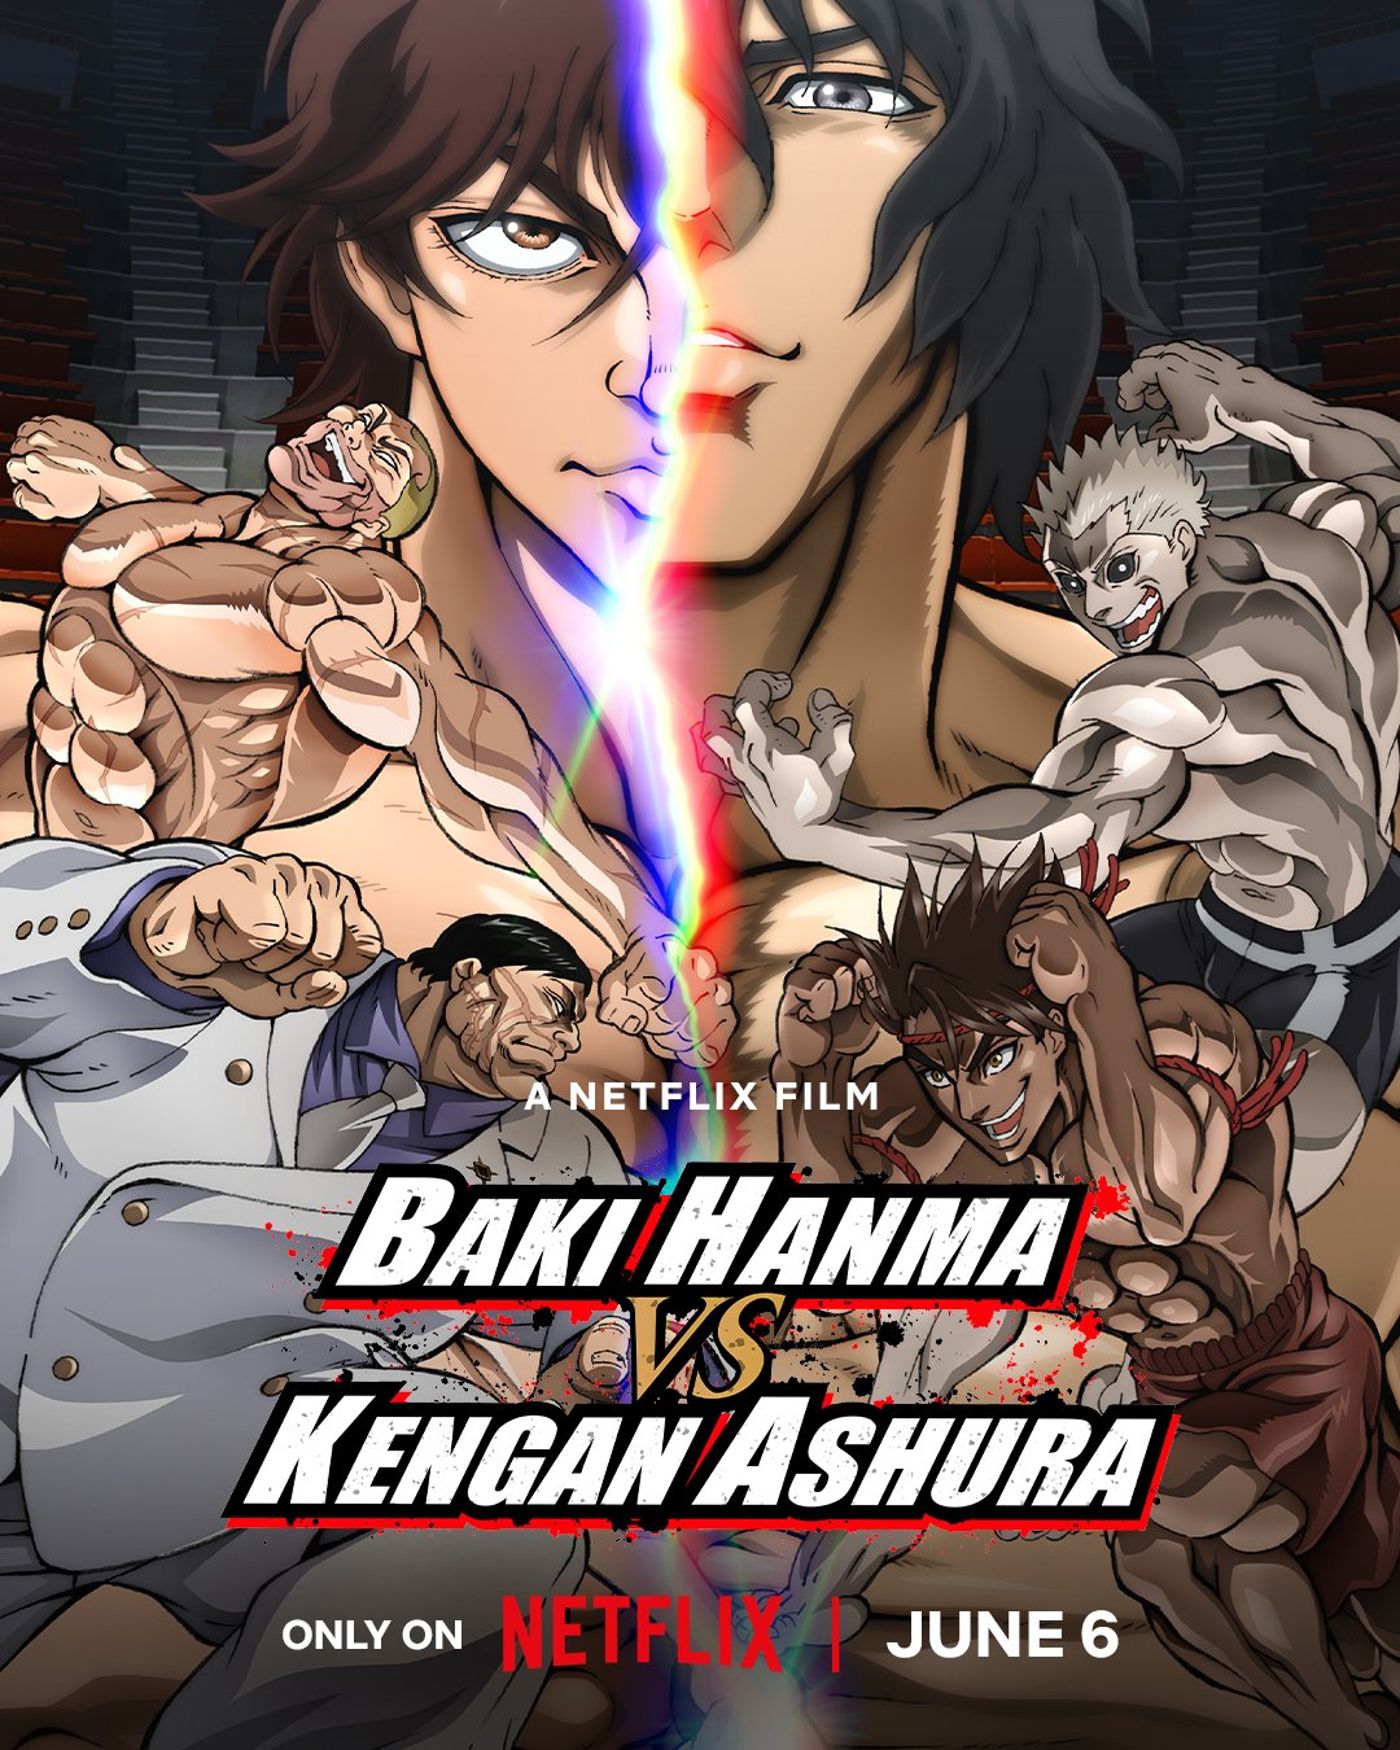 Baki Hanma vs Kengan Ashura Netflix movie promo visual